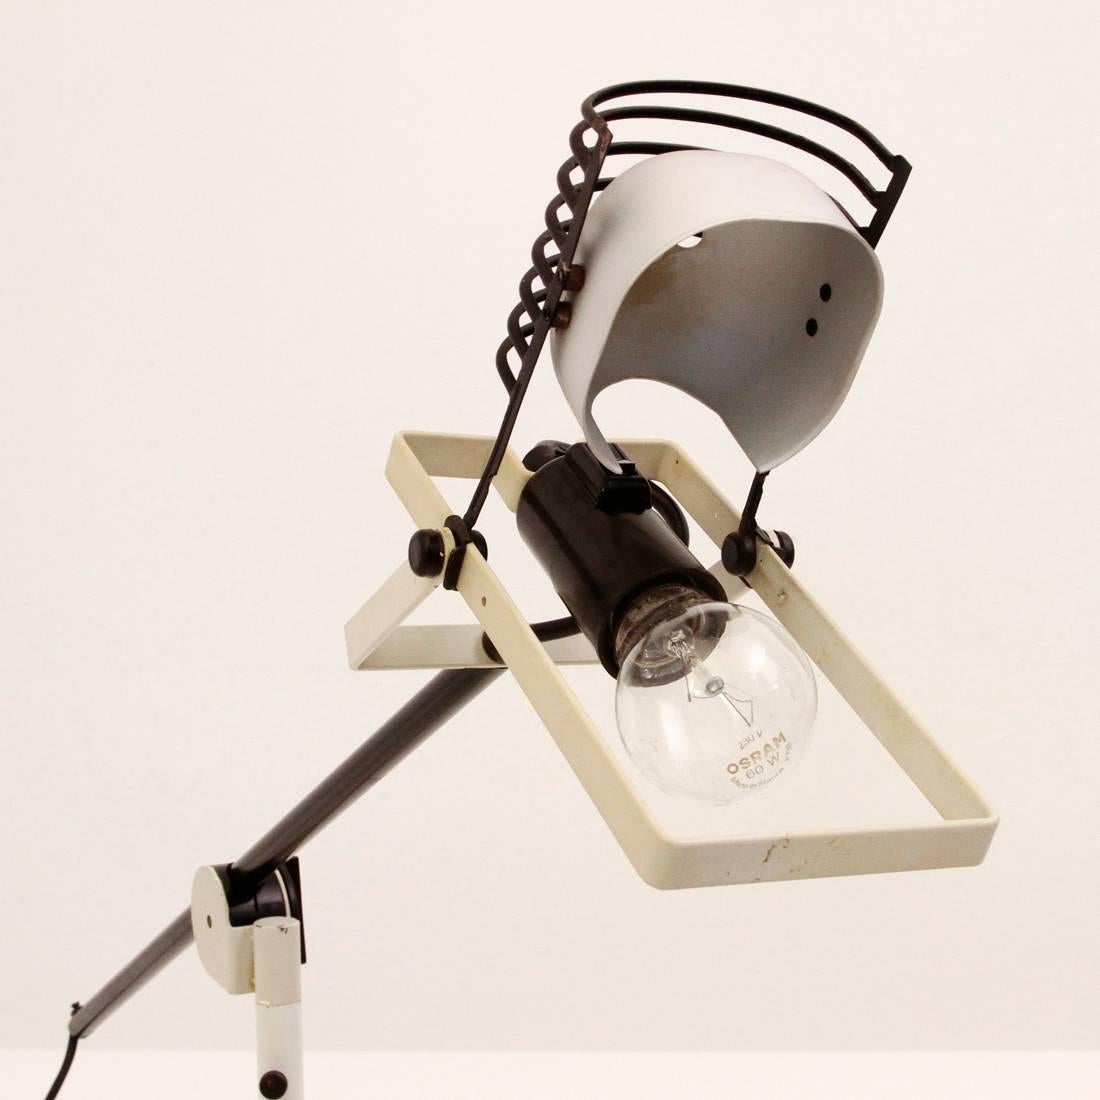 Anodized Sintesi Morsetto Table Lamp by Ernesto Gismondi for Artemide, 1970s